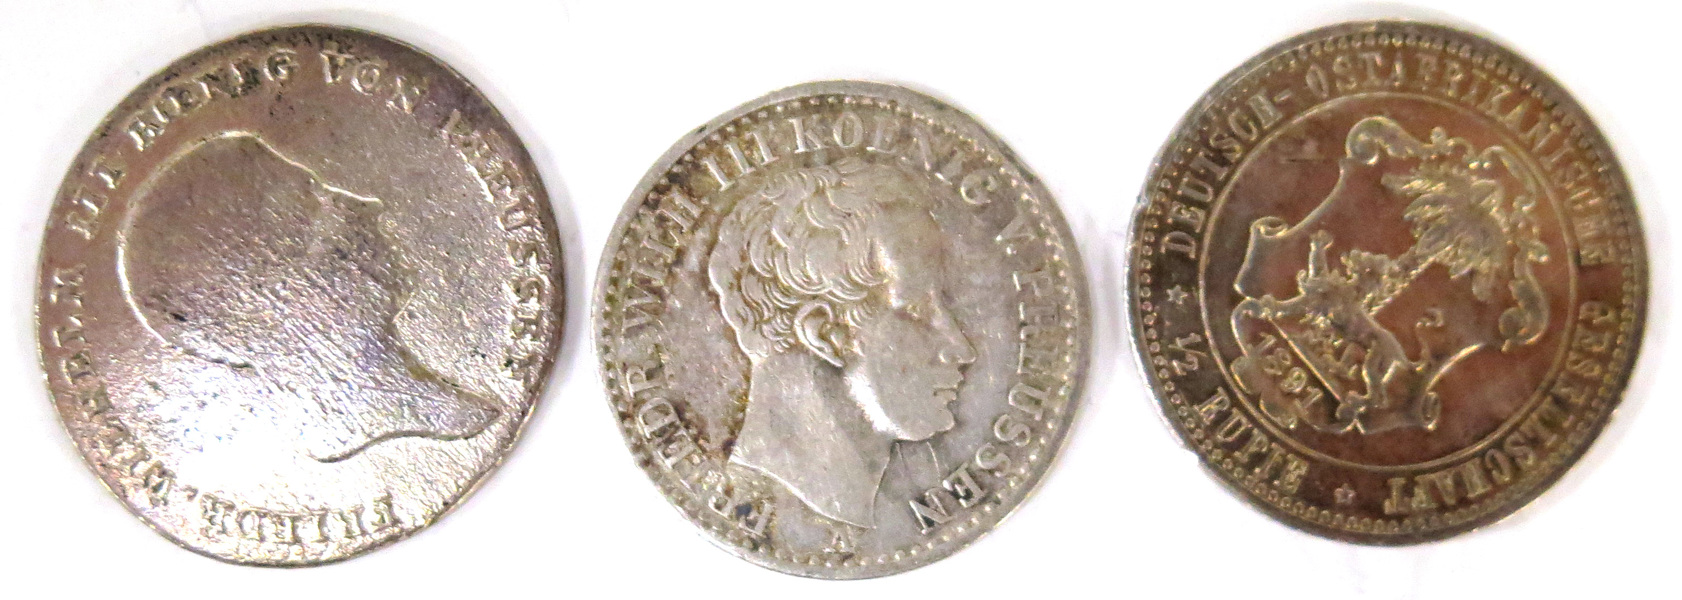 Silvermynt, 3 st, Tyskland 1800-tal, 2 st Preussen 1814 respektive 1823, _16628a_8d9f0a3bbc13277_lg.jpeg